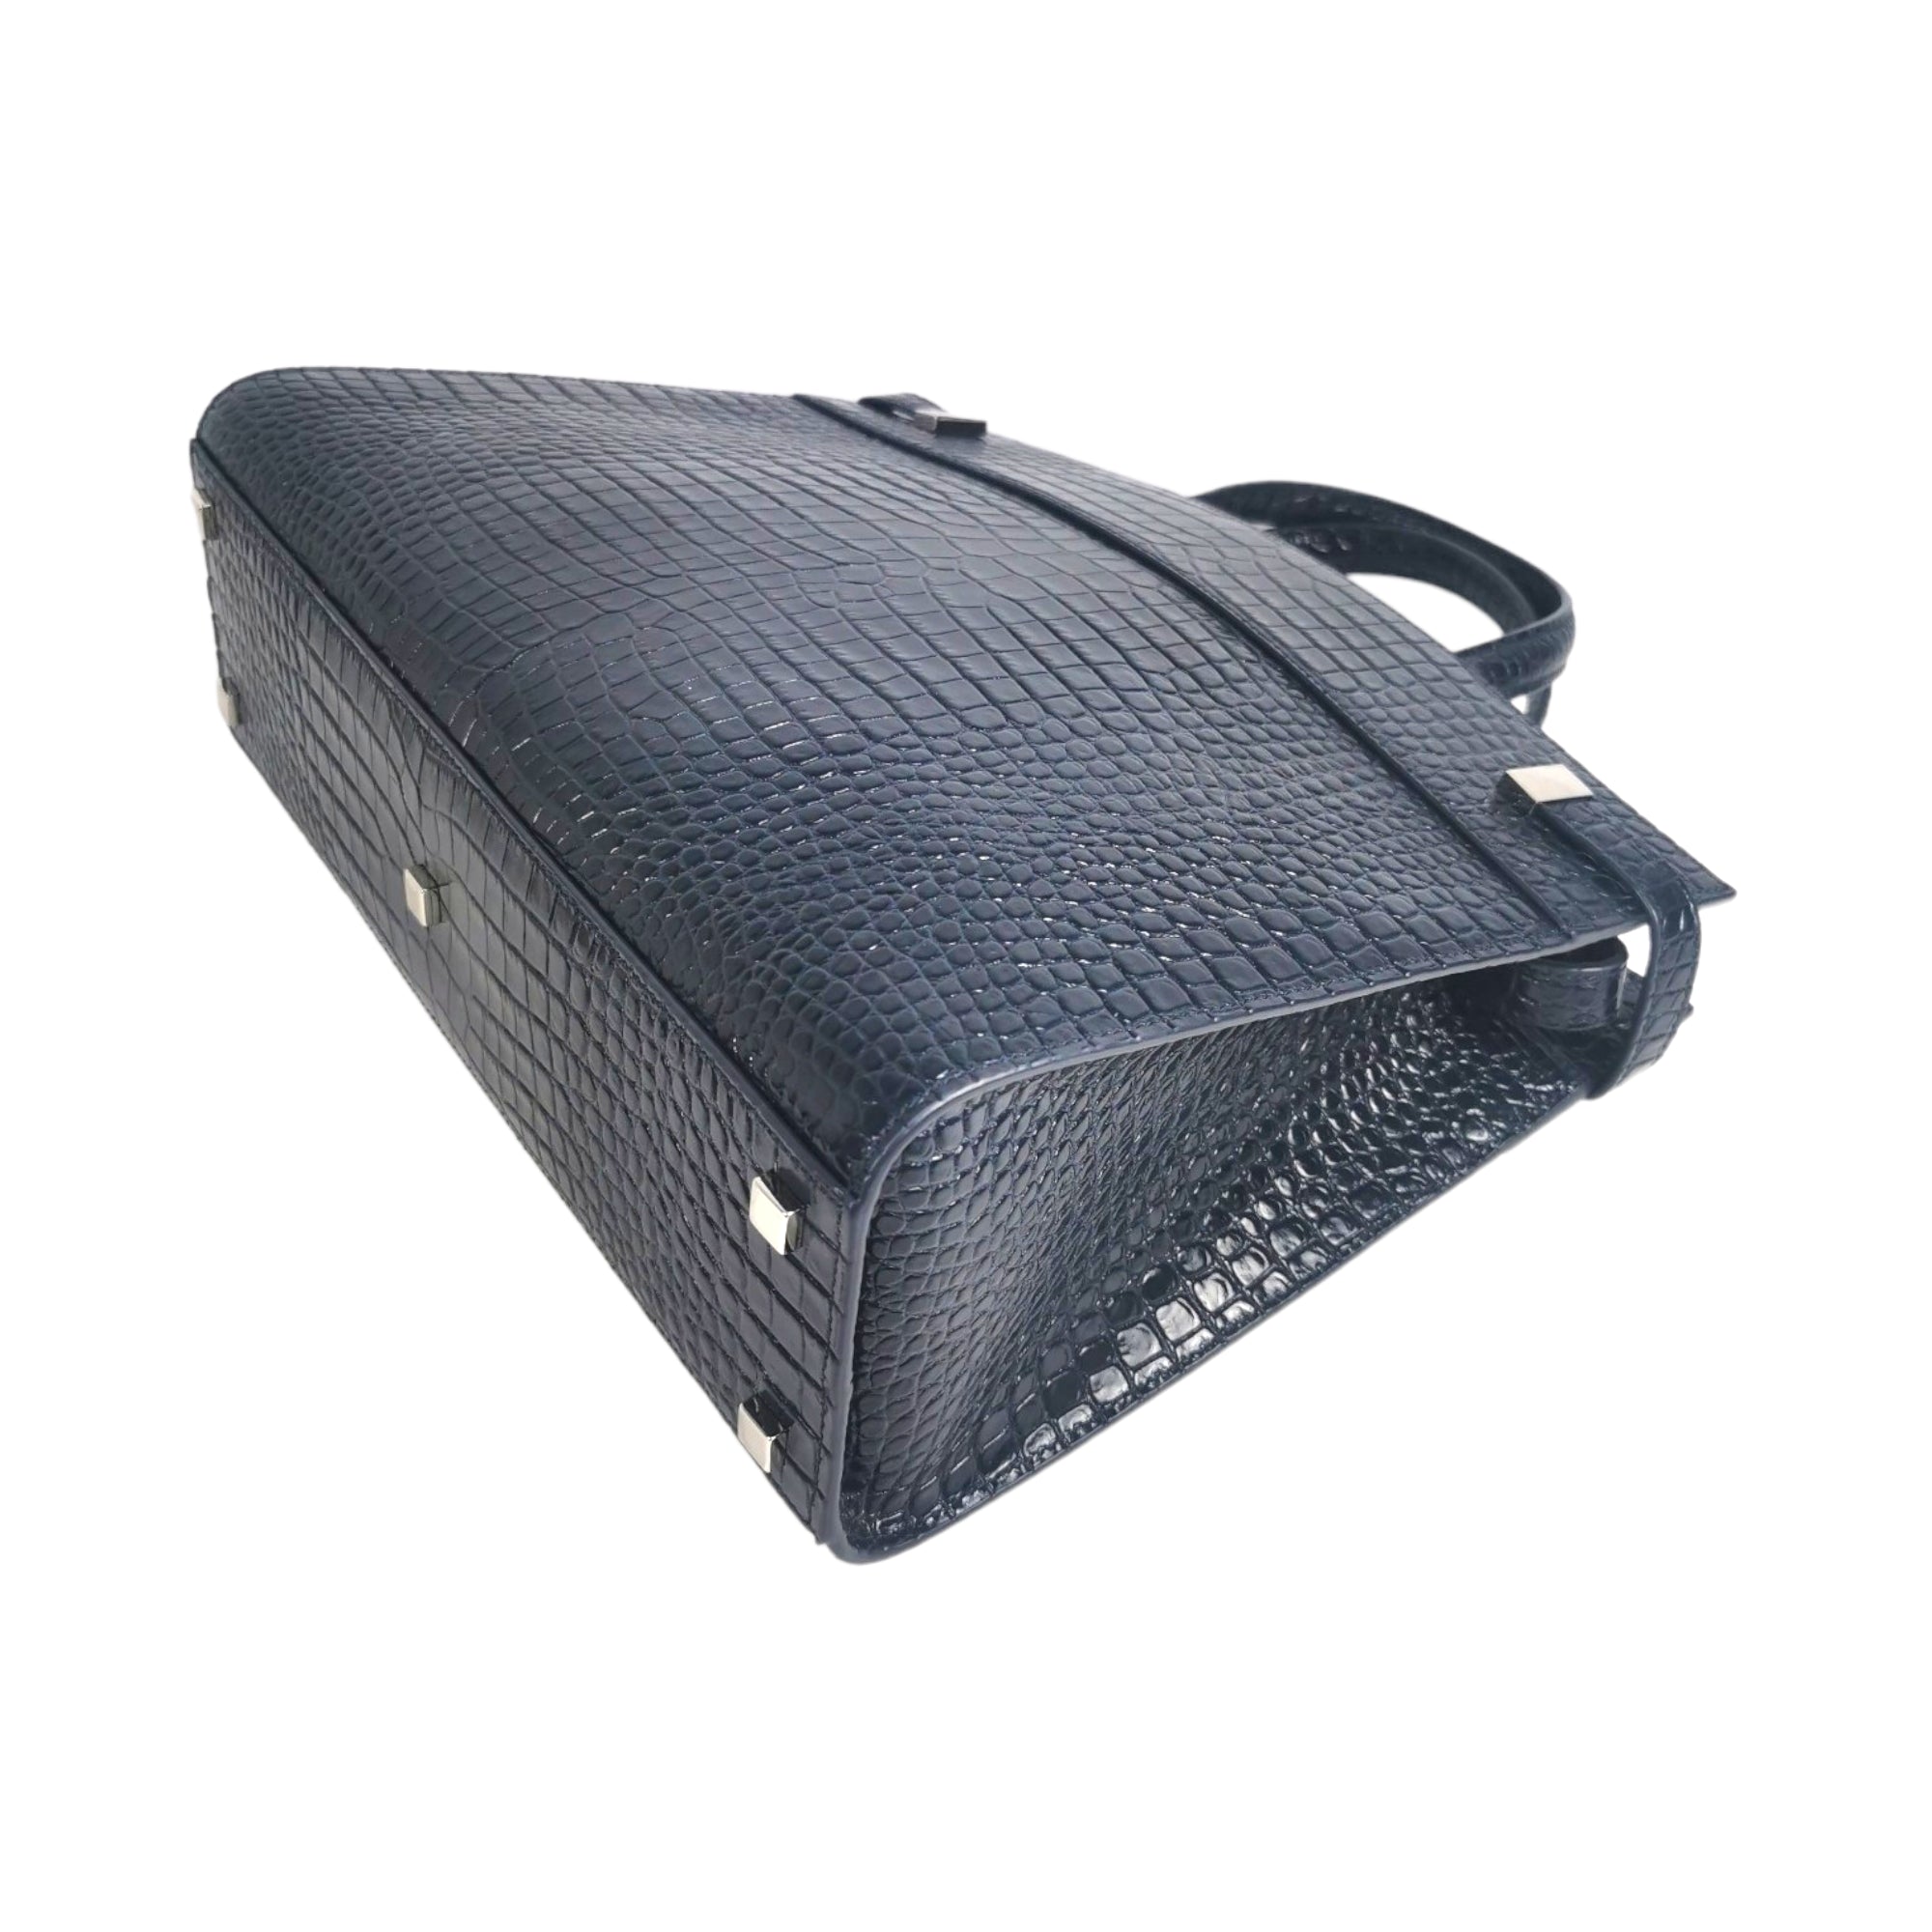 Dark Blue Croc Embossed Leather Handbags